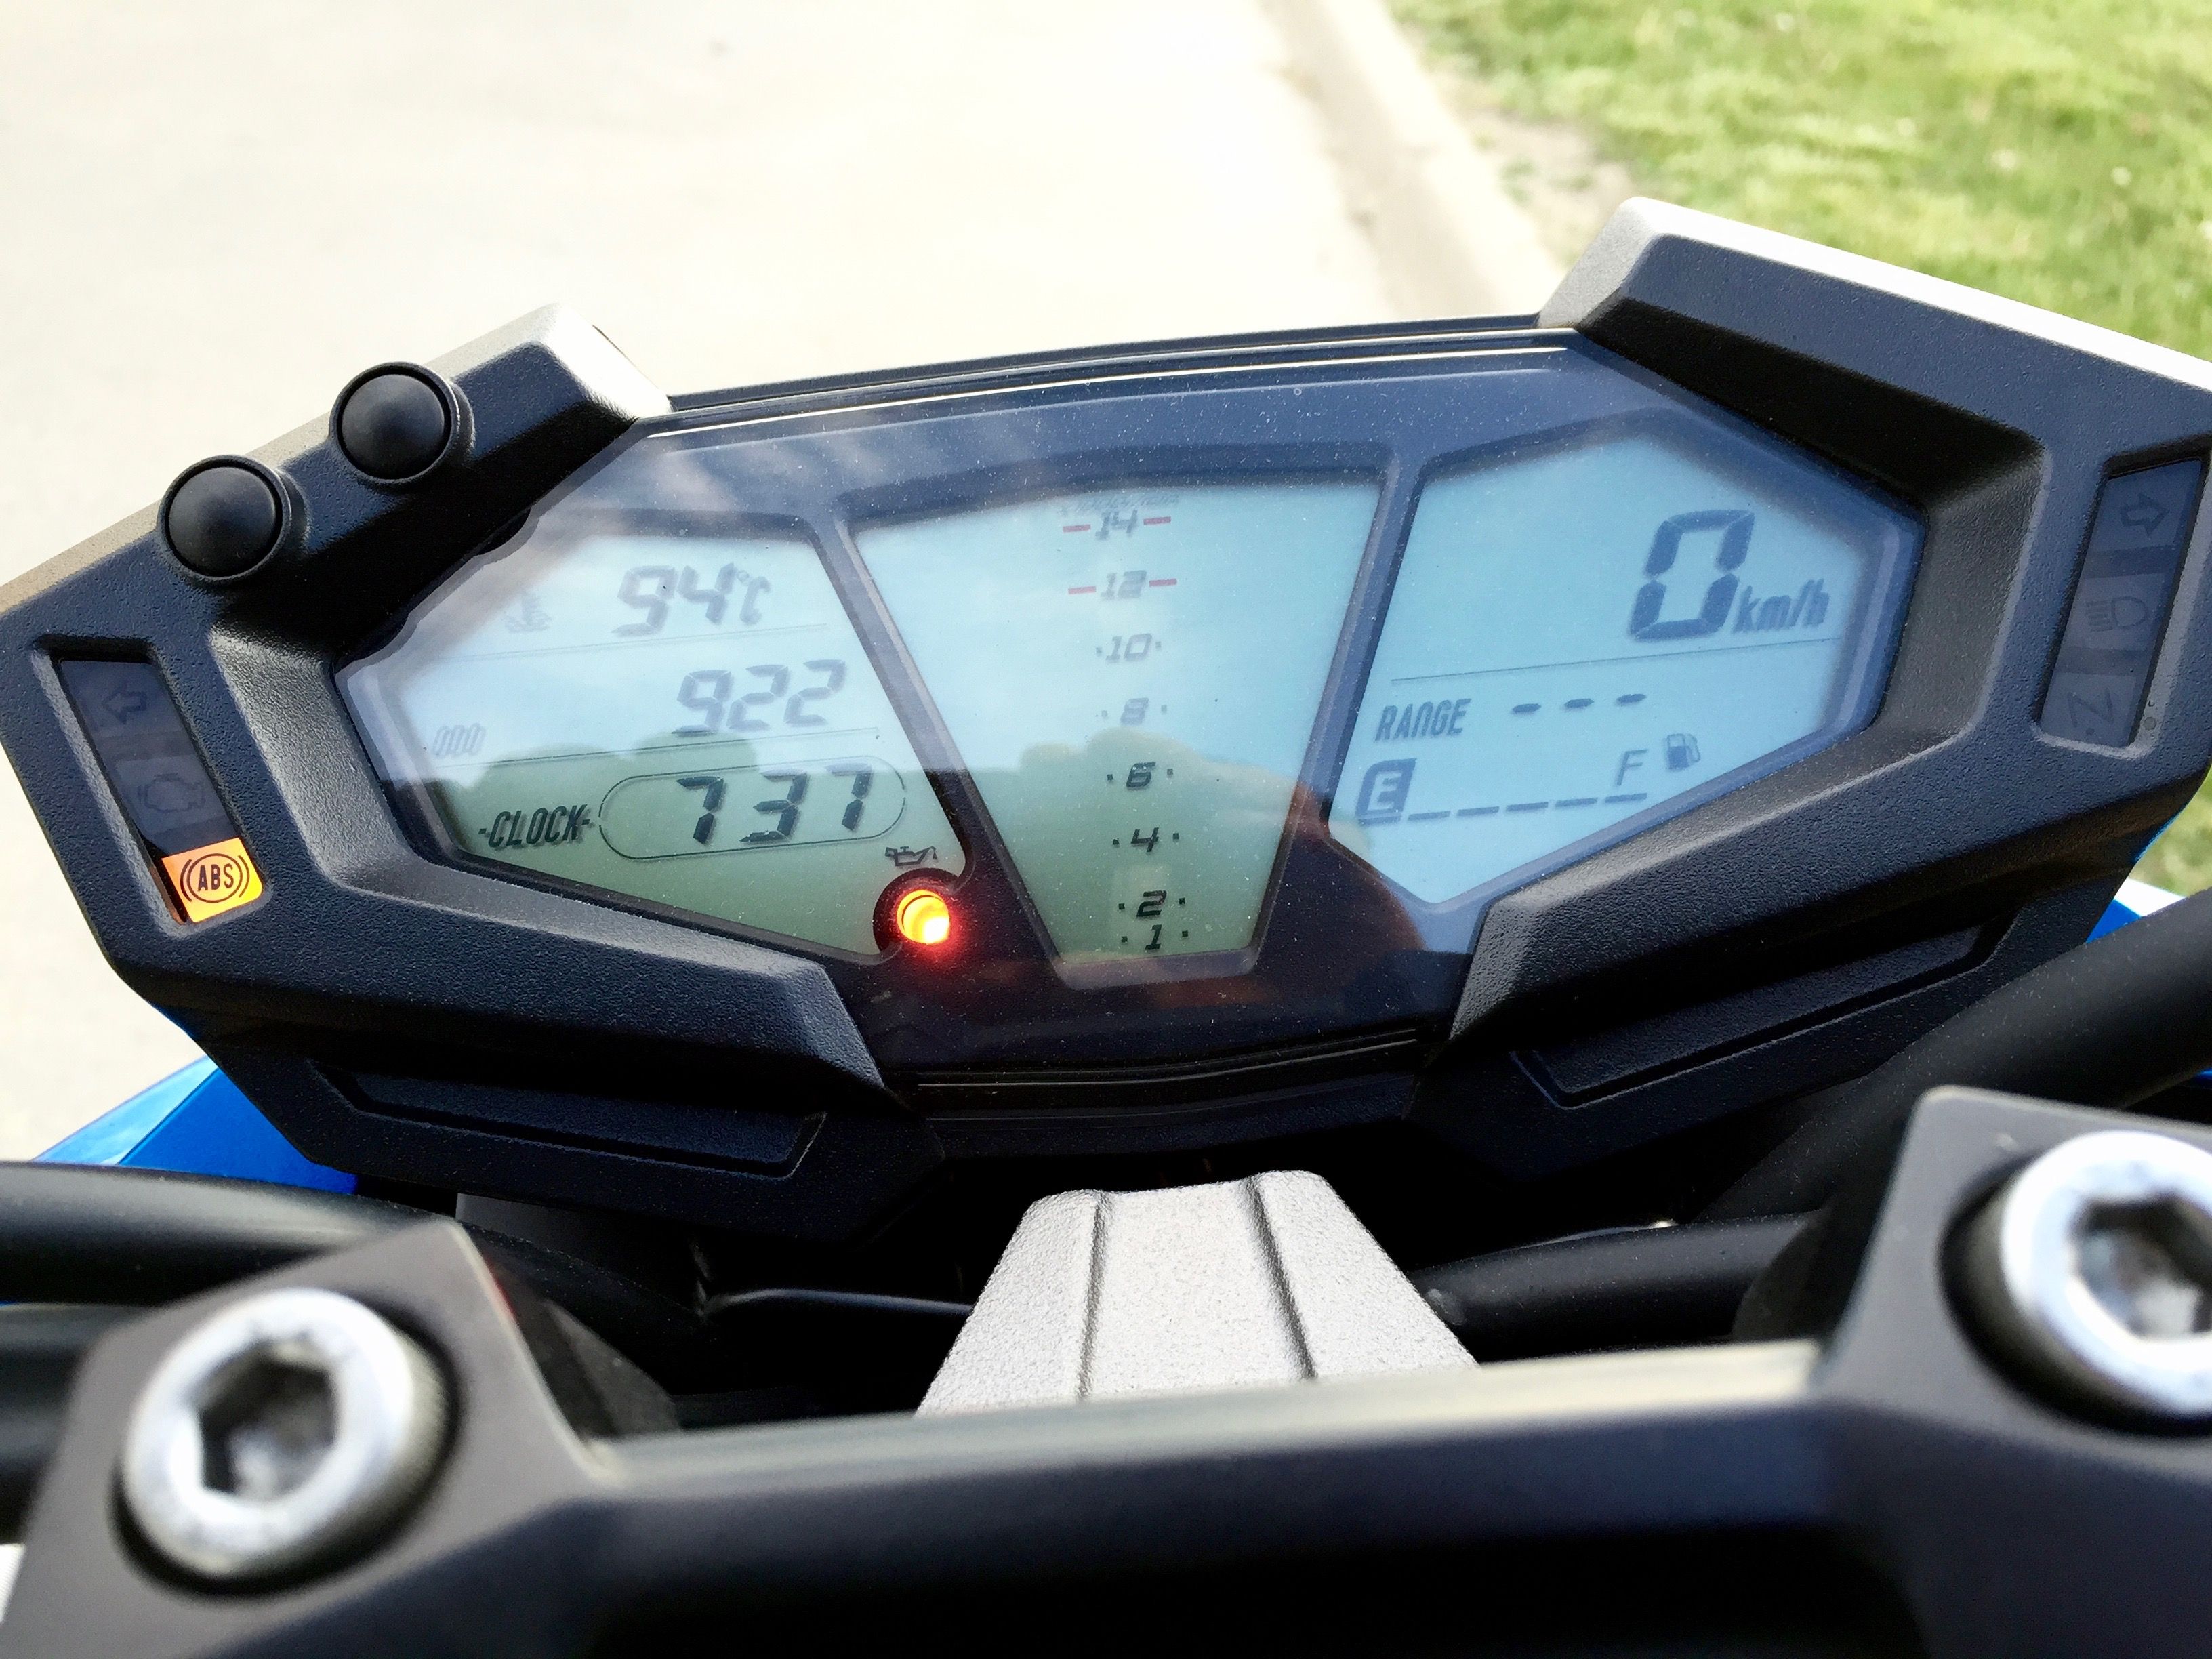 2016 Kawasaki Z800: No rider modes, no traction control and no wheelie control.